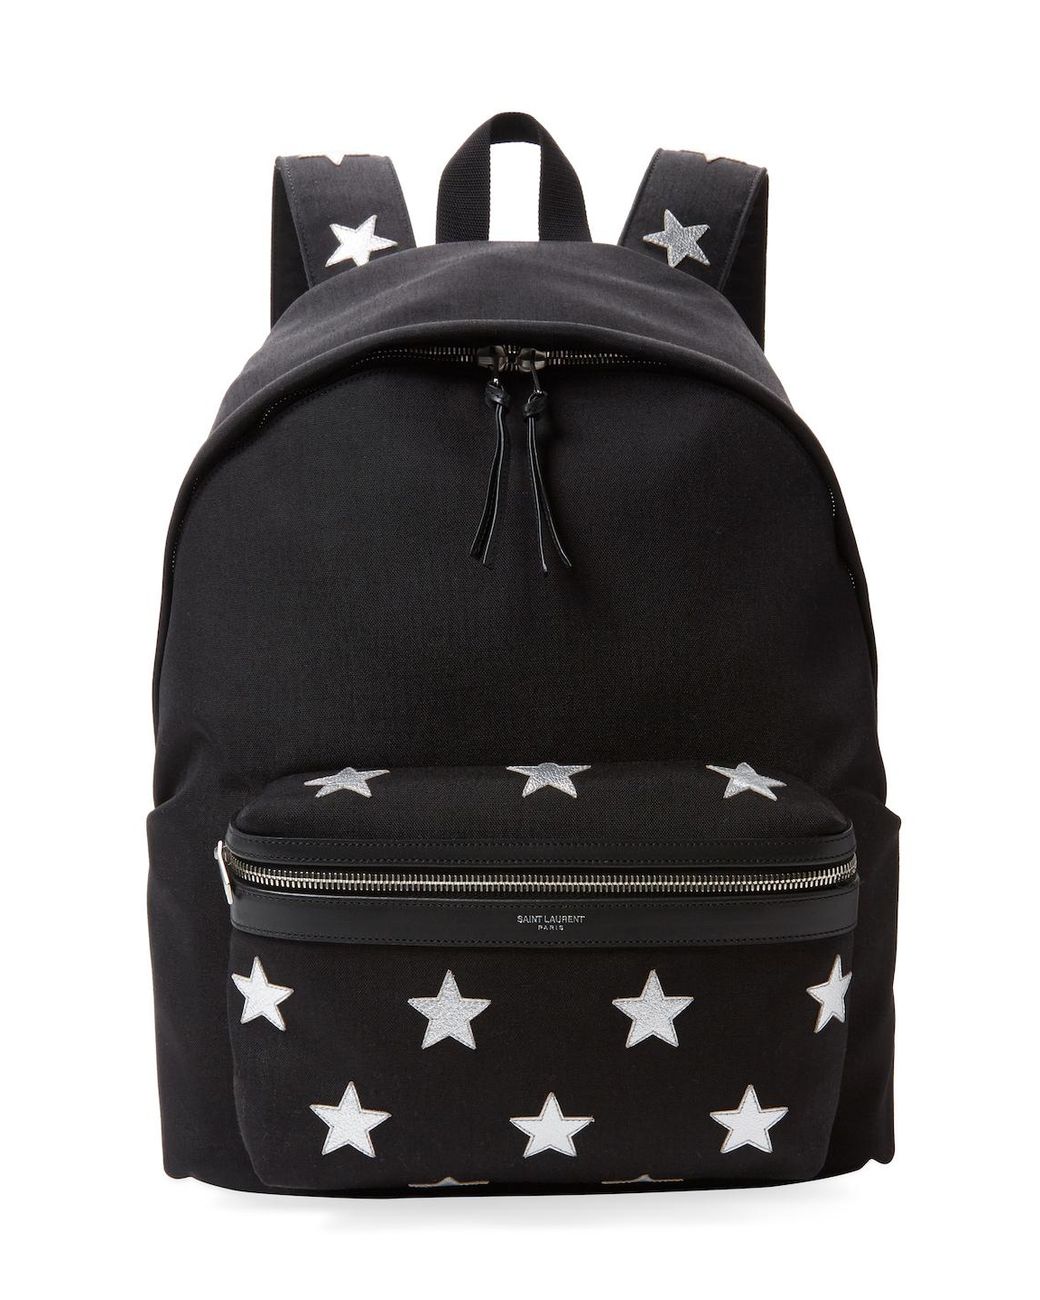 Saint Laurent City California Star Backpack in Black | Lyst